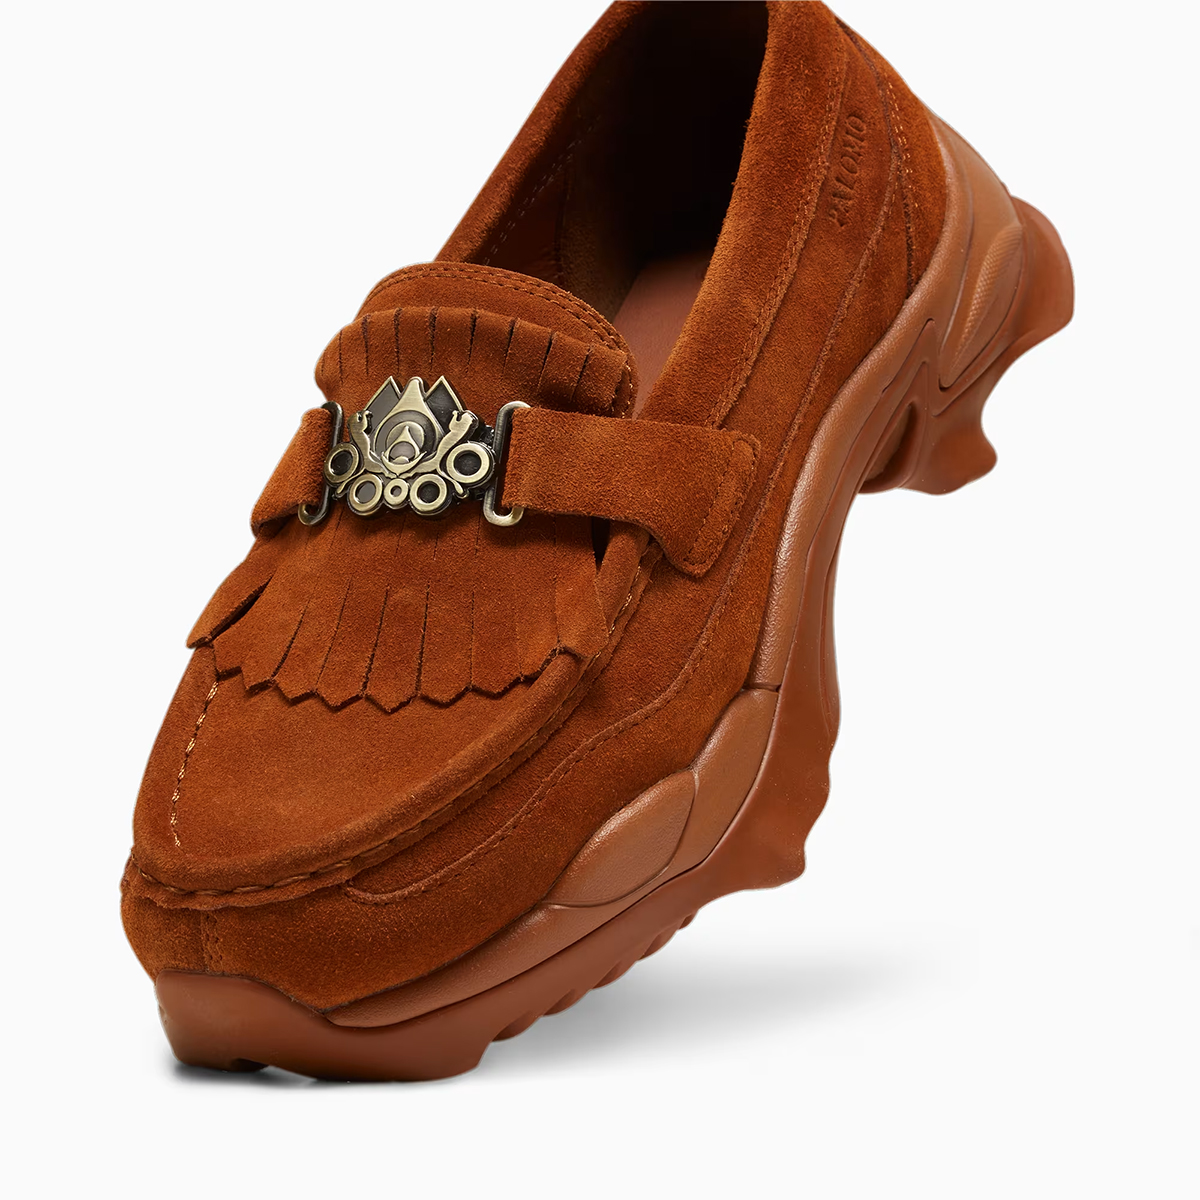 Palomo Puma Nitefox Leather Sneaker Loafer Teak 396816 01 1